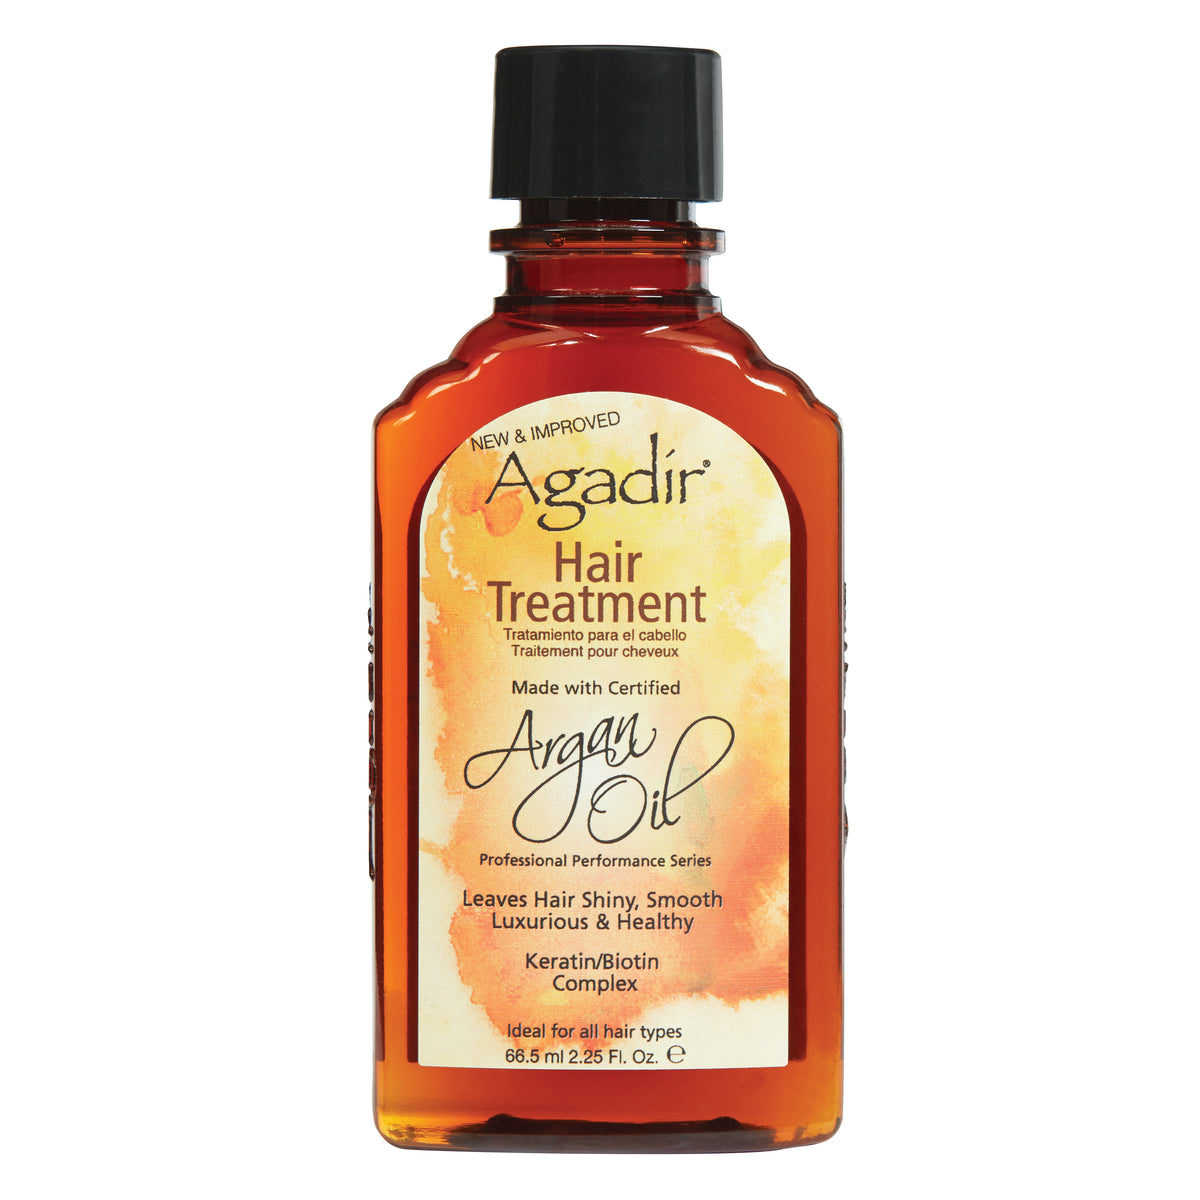 Argan Oil Hair Treatment - 2.25 oz. Travel Size